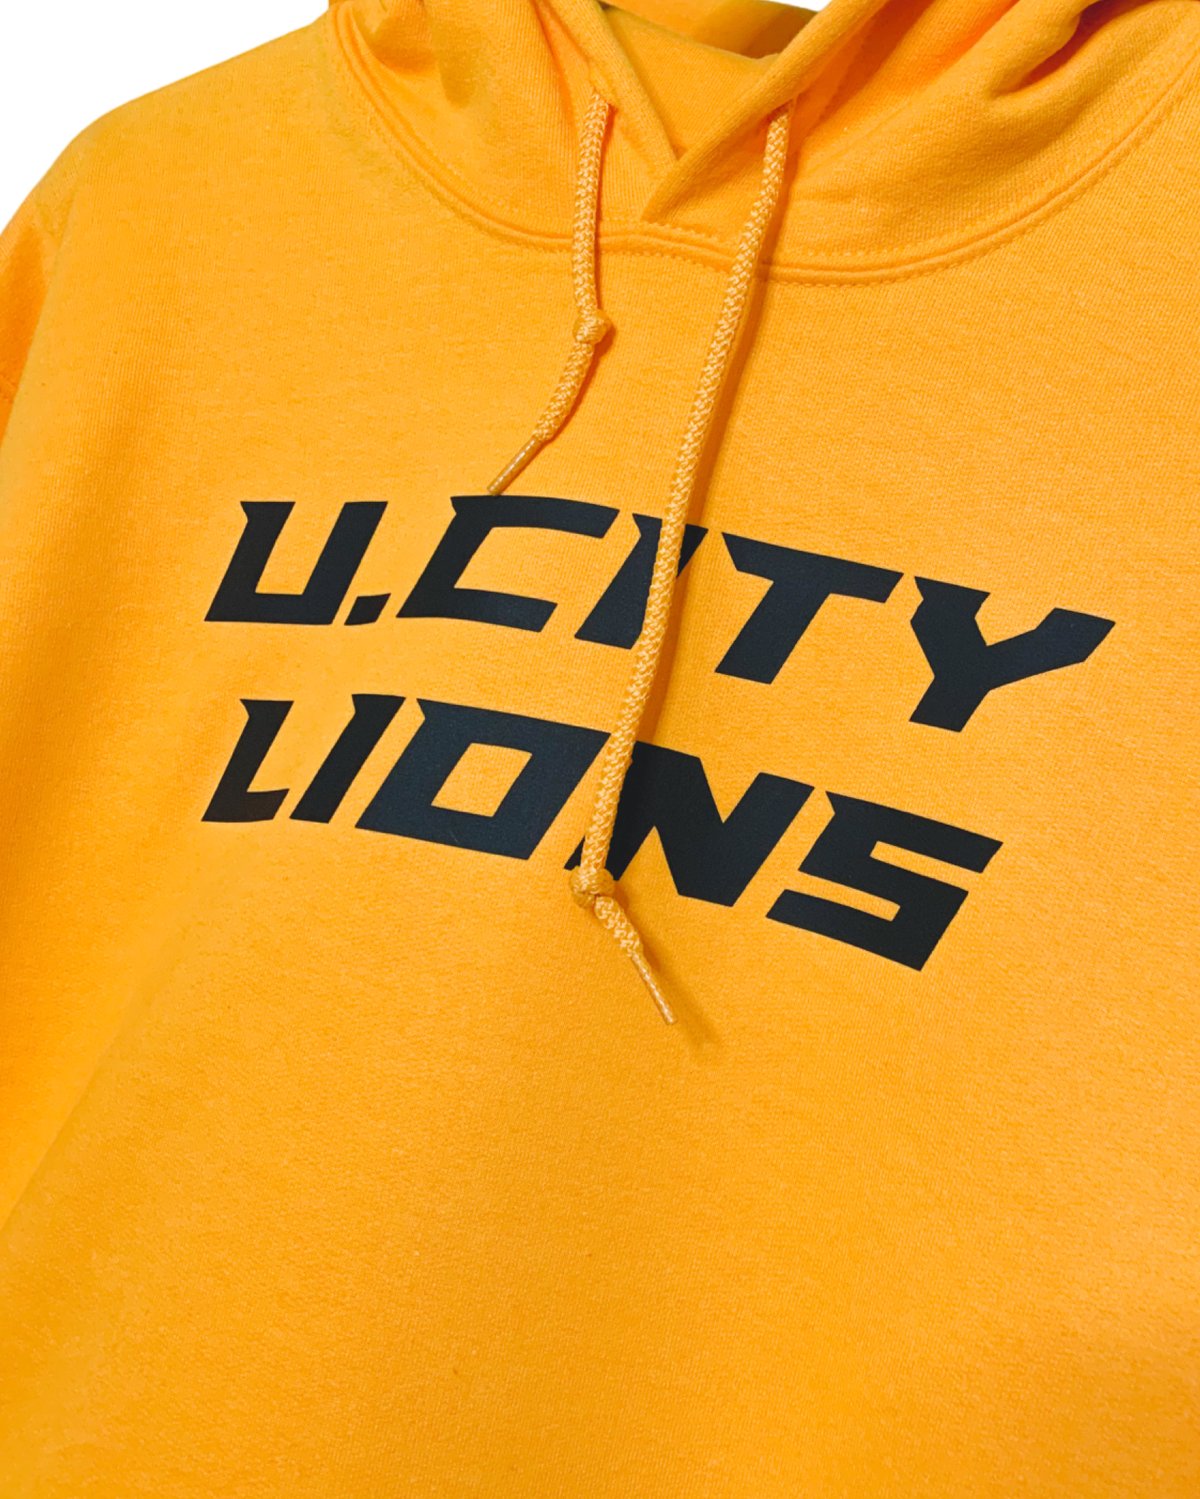 Image of U.City Lions Hoodie-Gold/Black